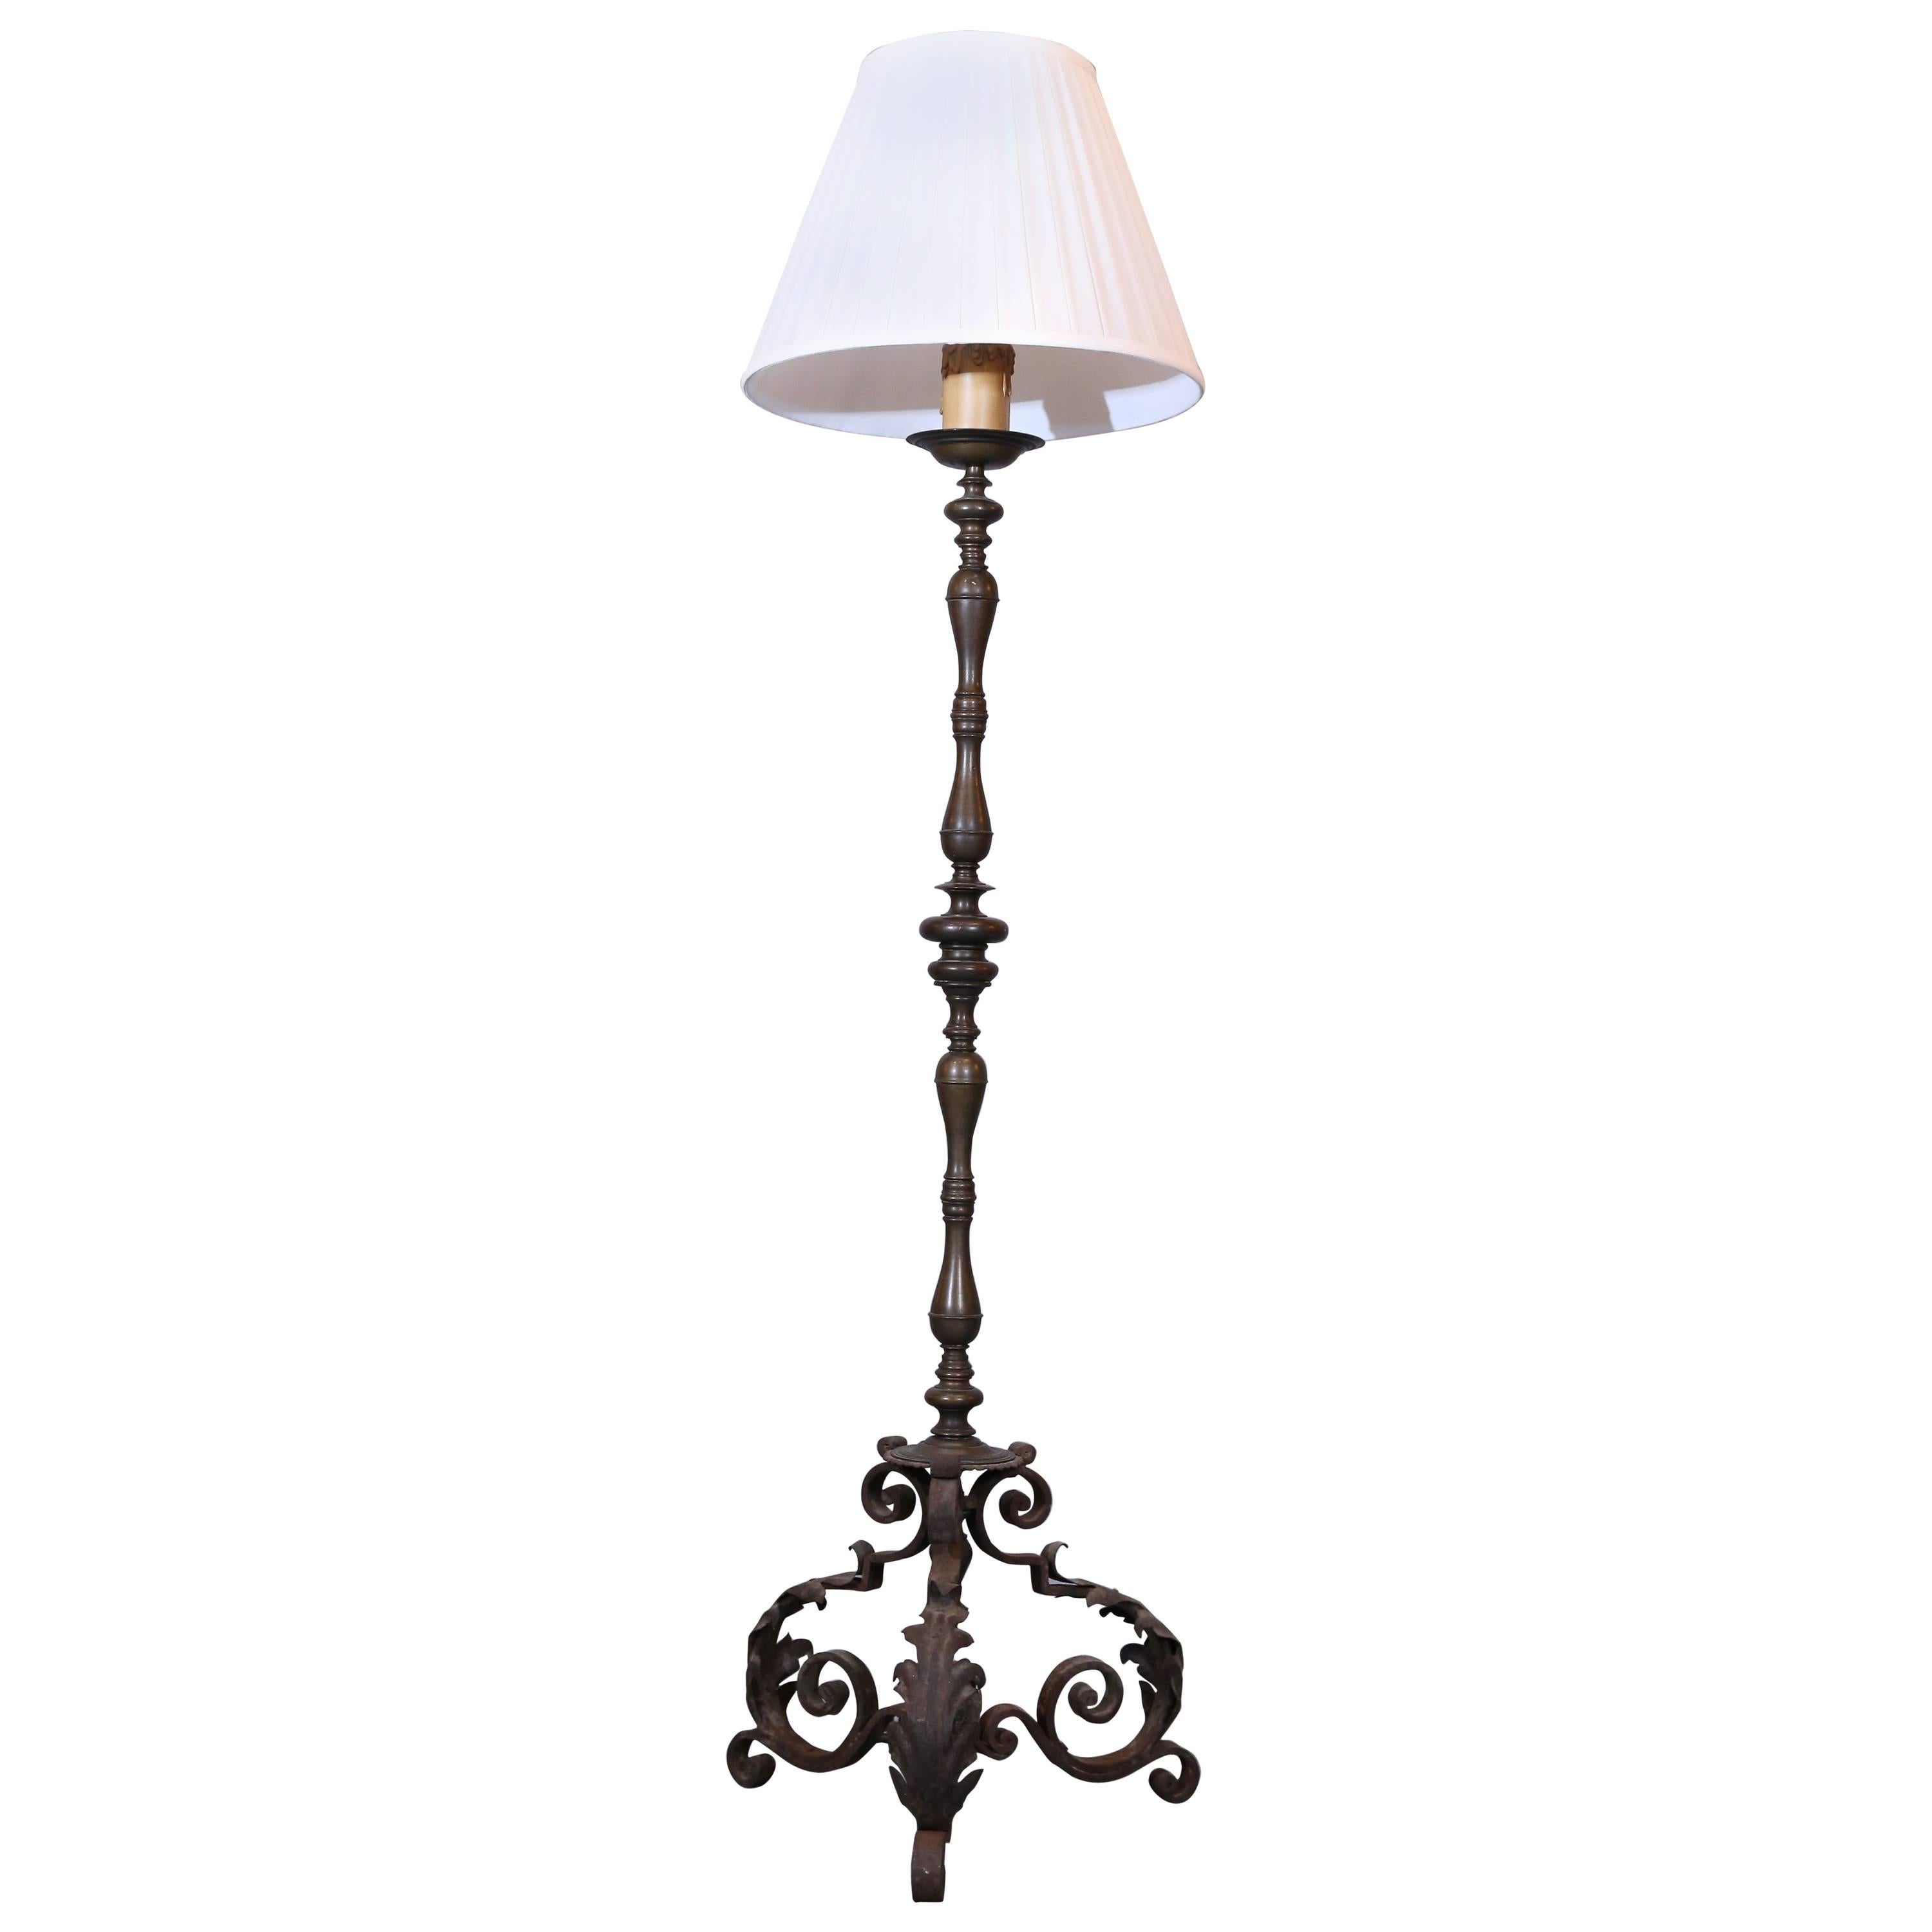 Antique Baroque Bronze and Wrought Iron Floor Lamp